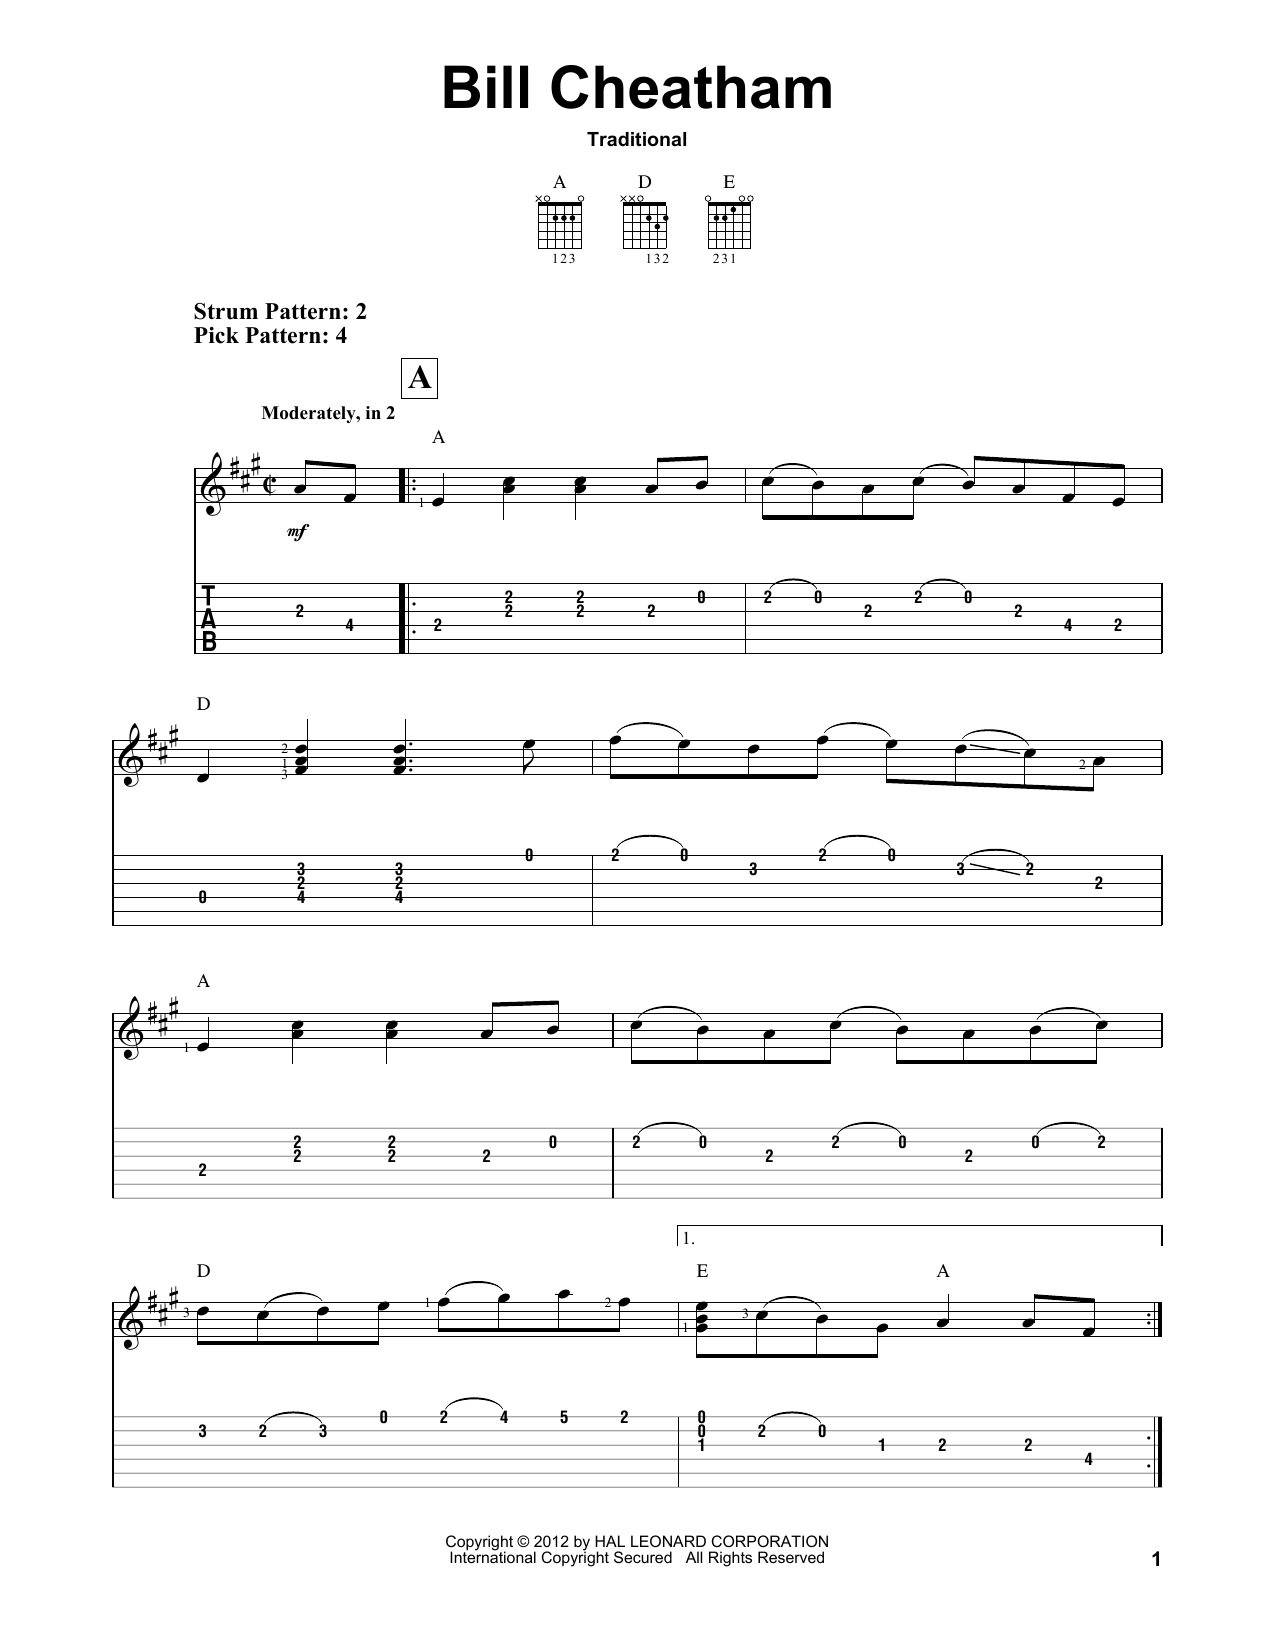 Traditional Bill Cheatham Sheet Music Notes & Chords for Banjo - Download or Print PDF